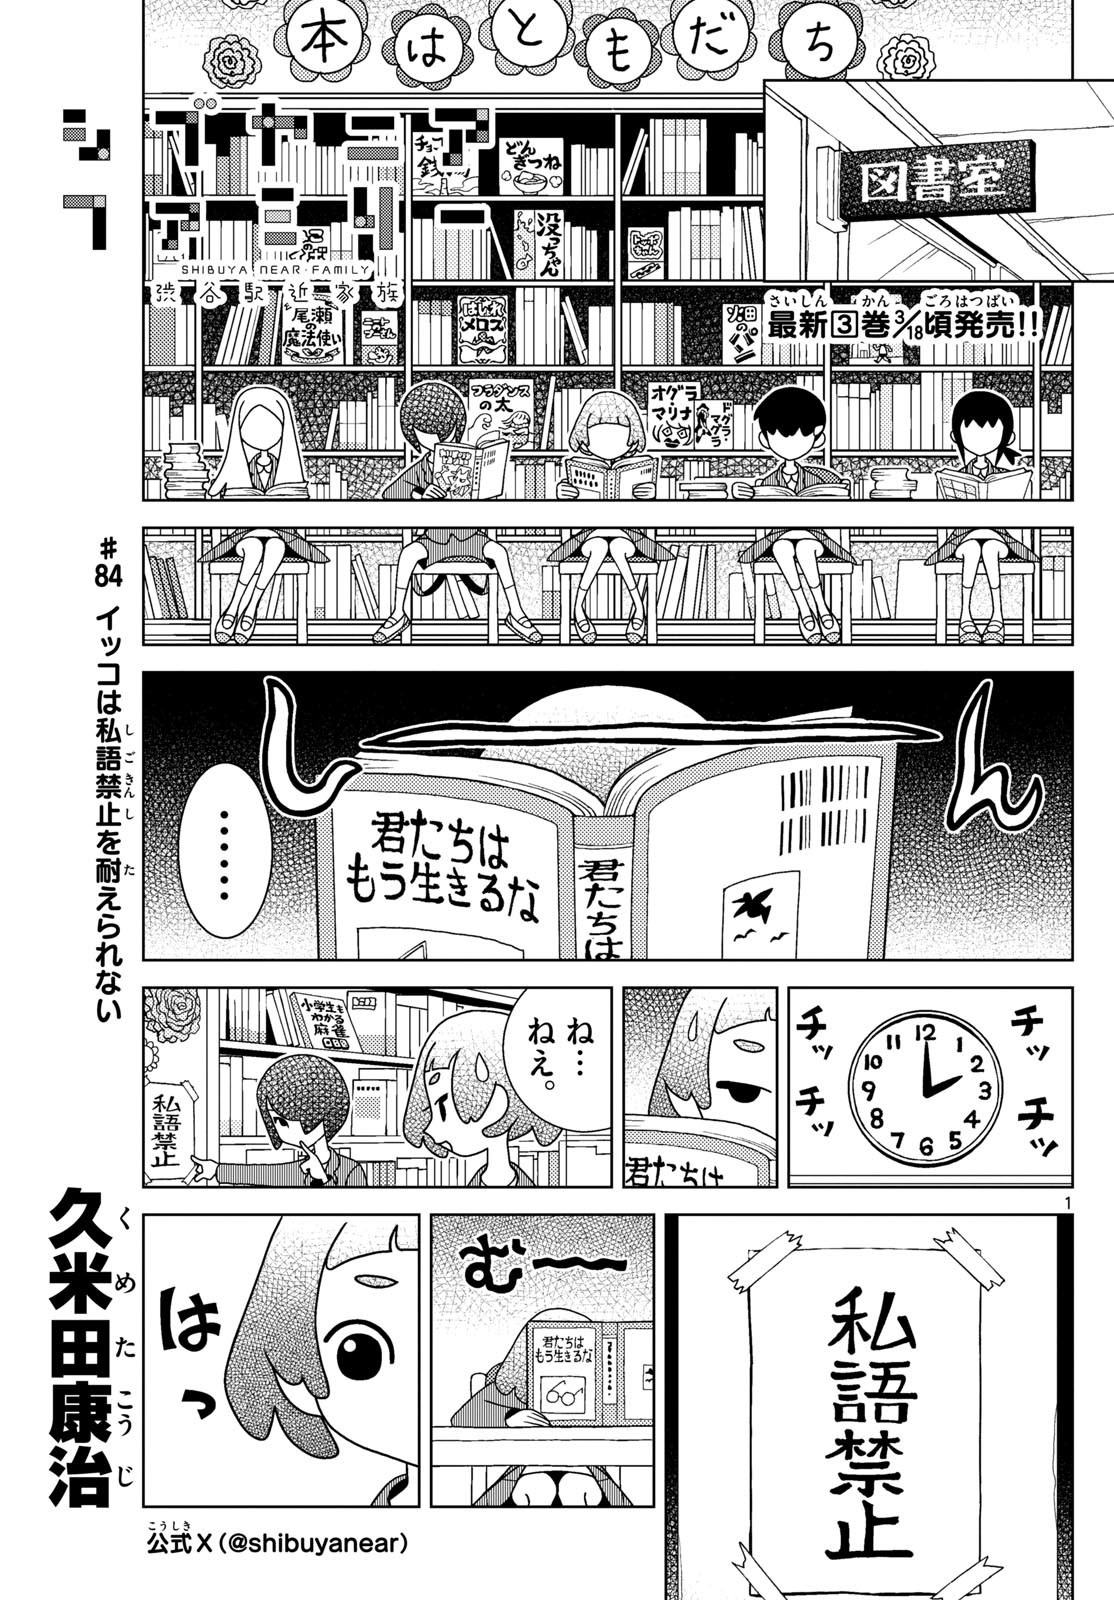 Shibuya Near Family - Chapter 084 - Page 1